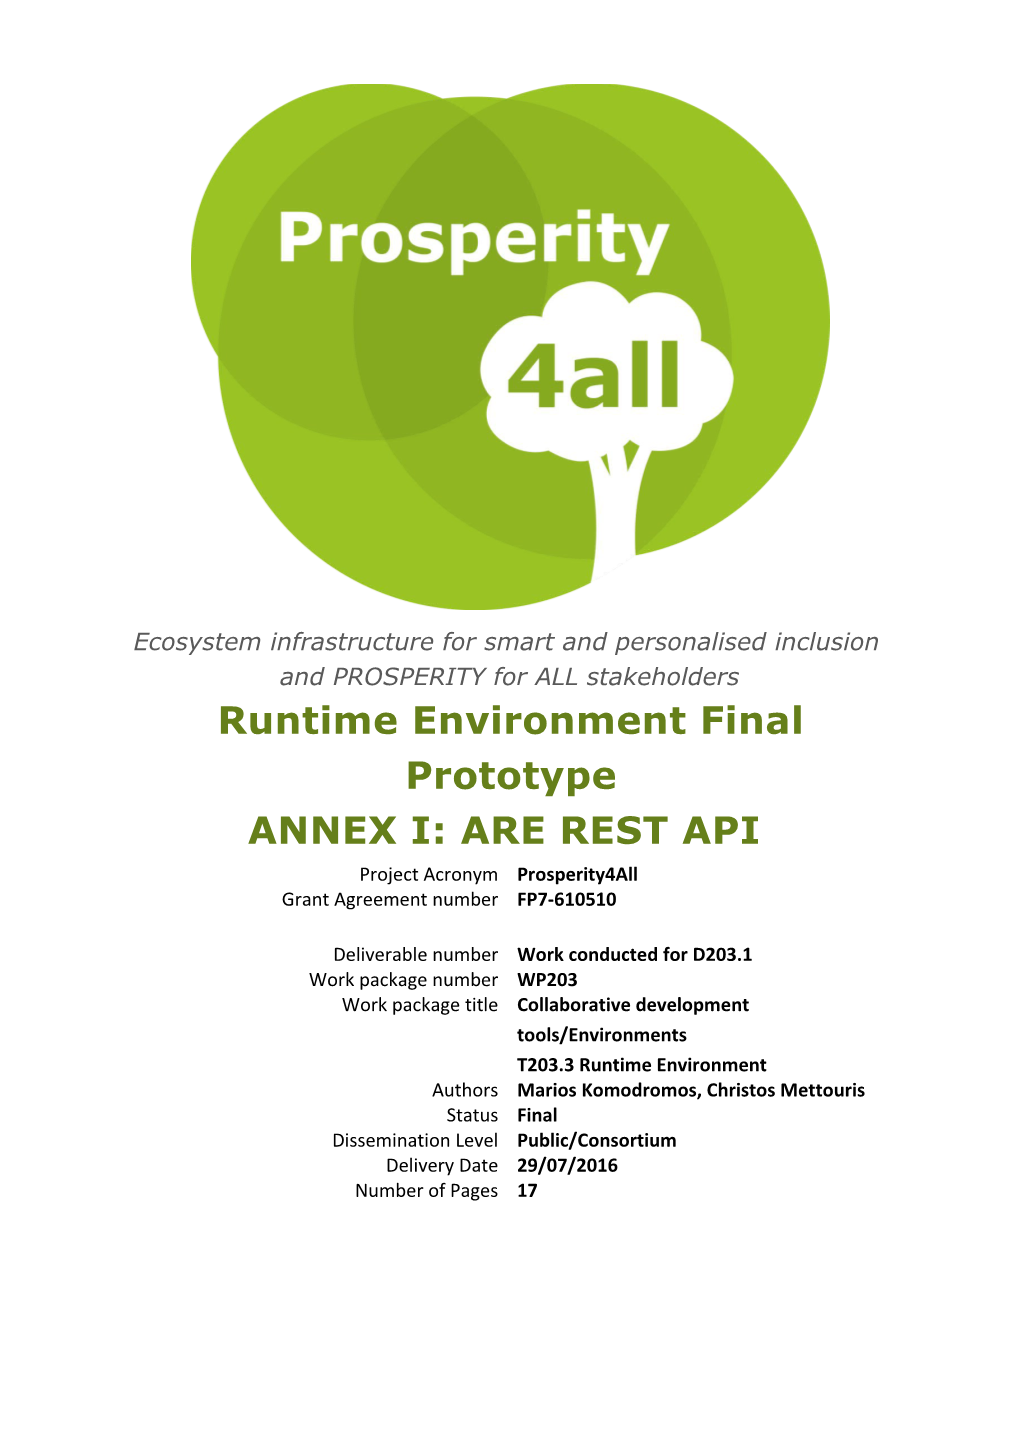 Runtime Environment Final Prototype